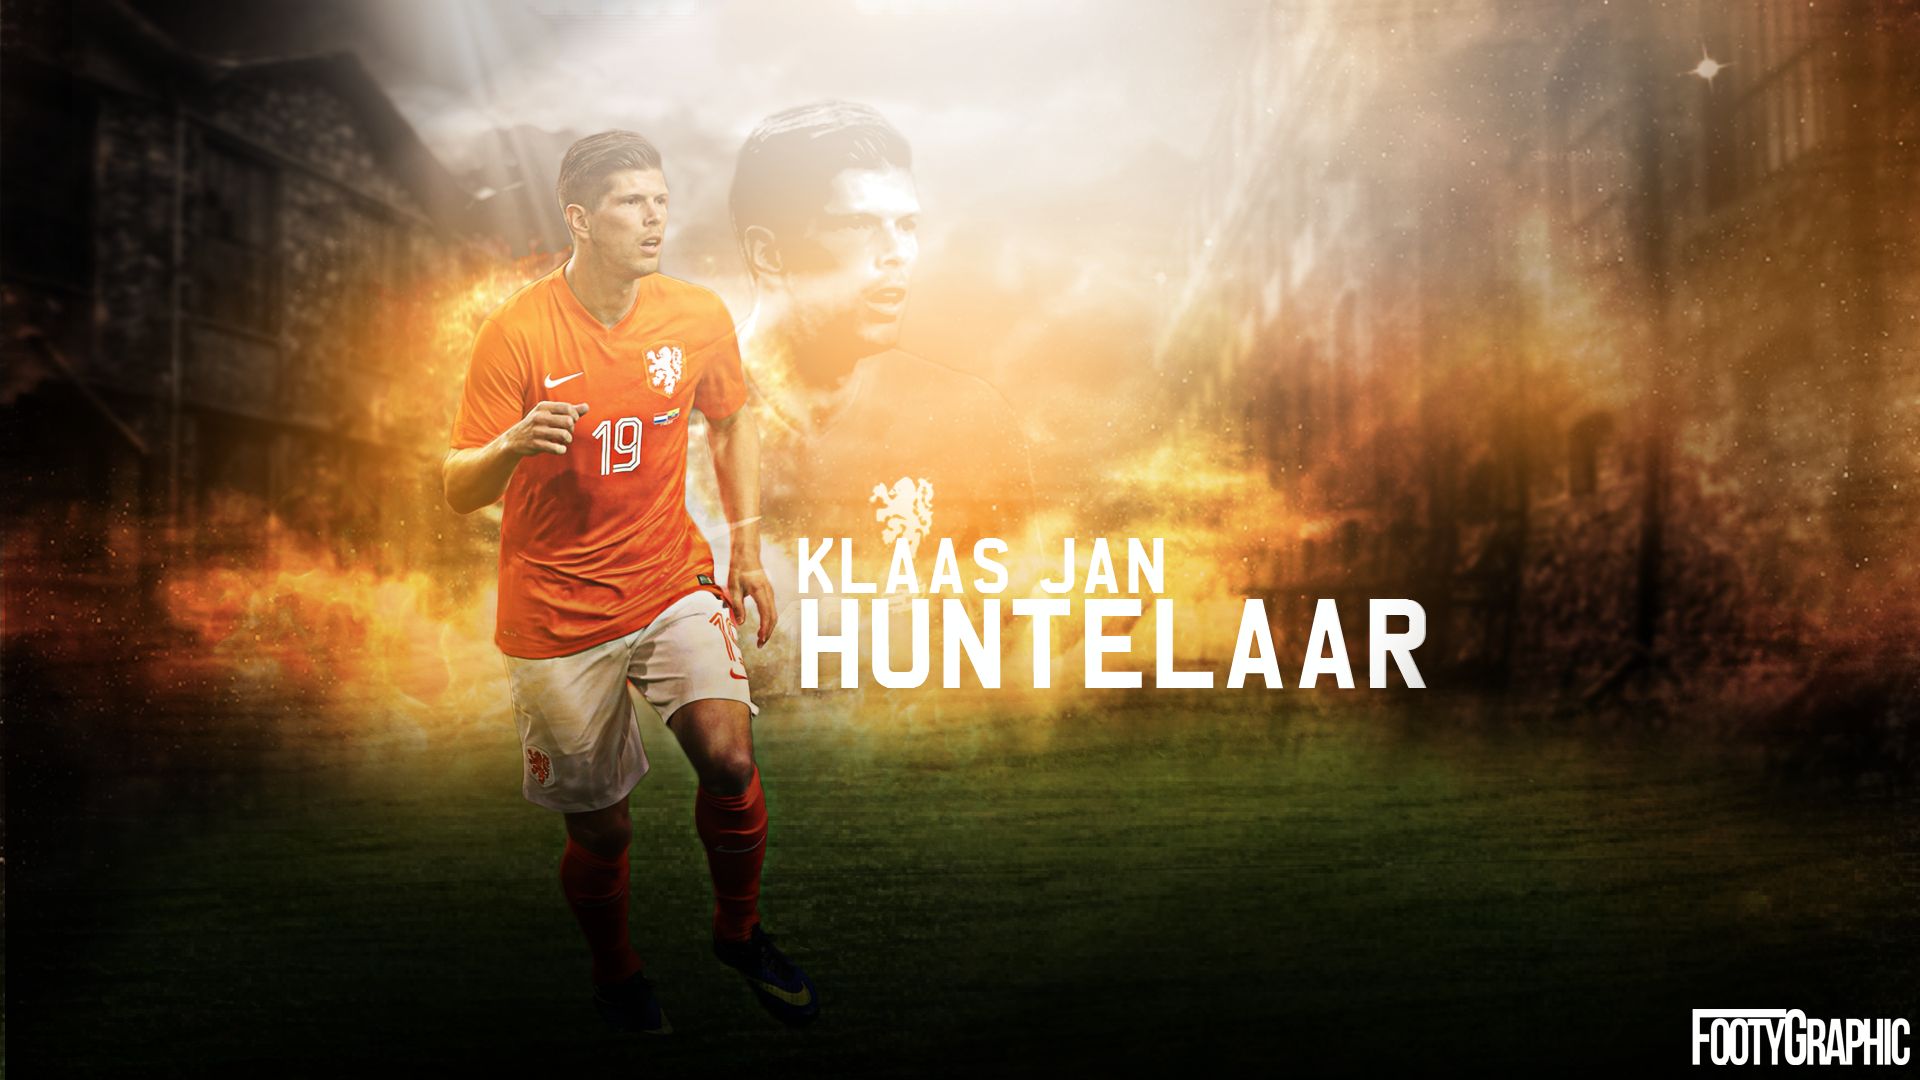 Télécharger des fonds d'écran Klaas Jan Huntelaar HD